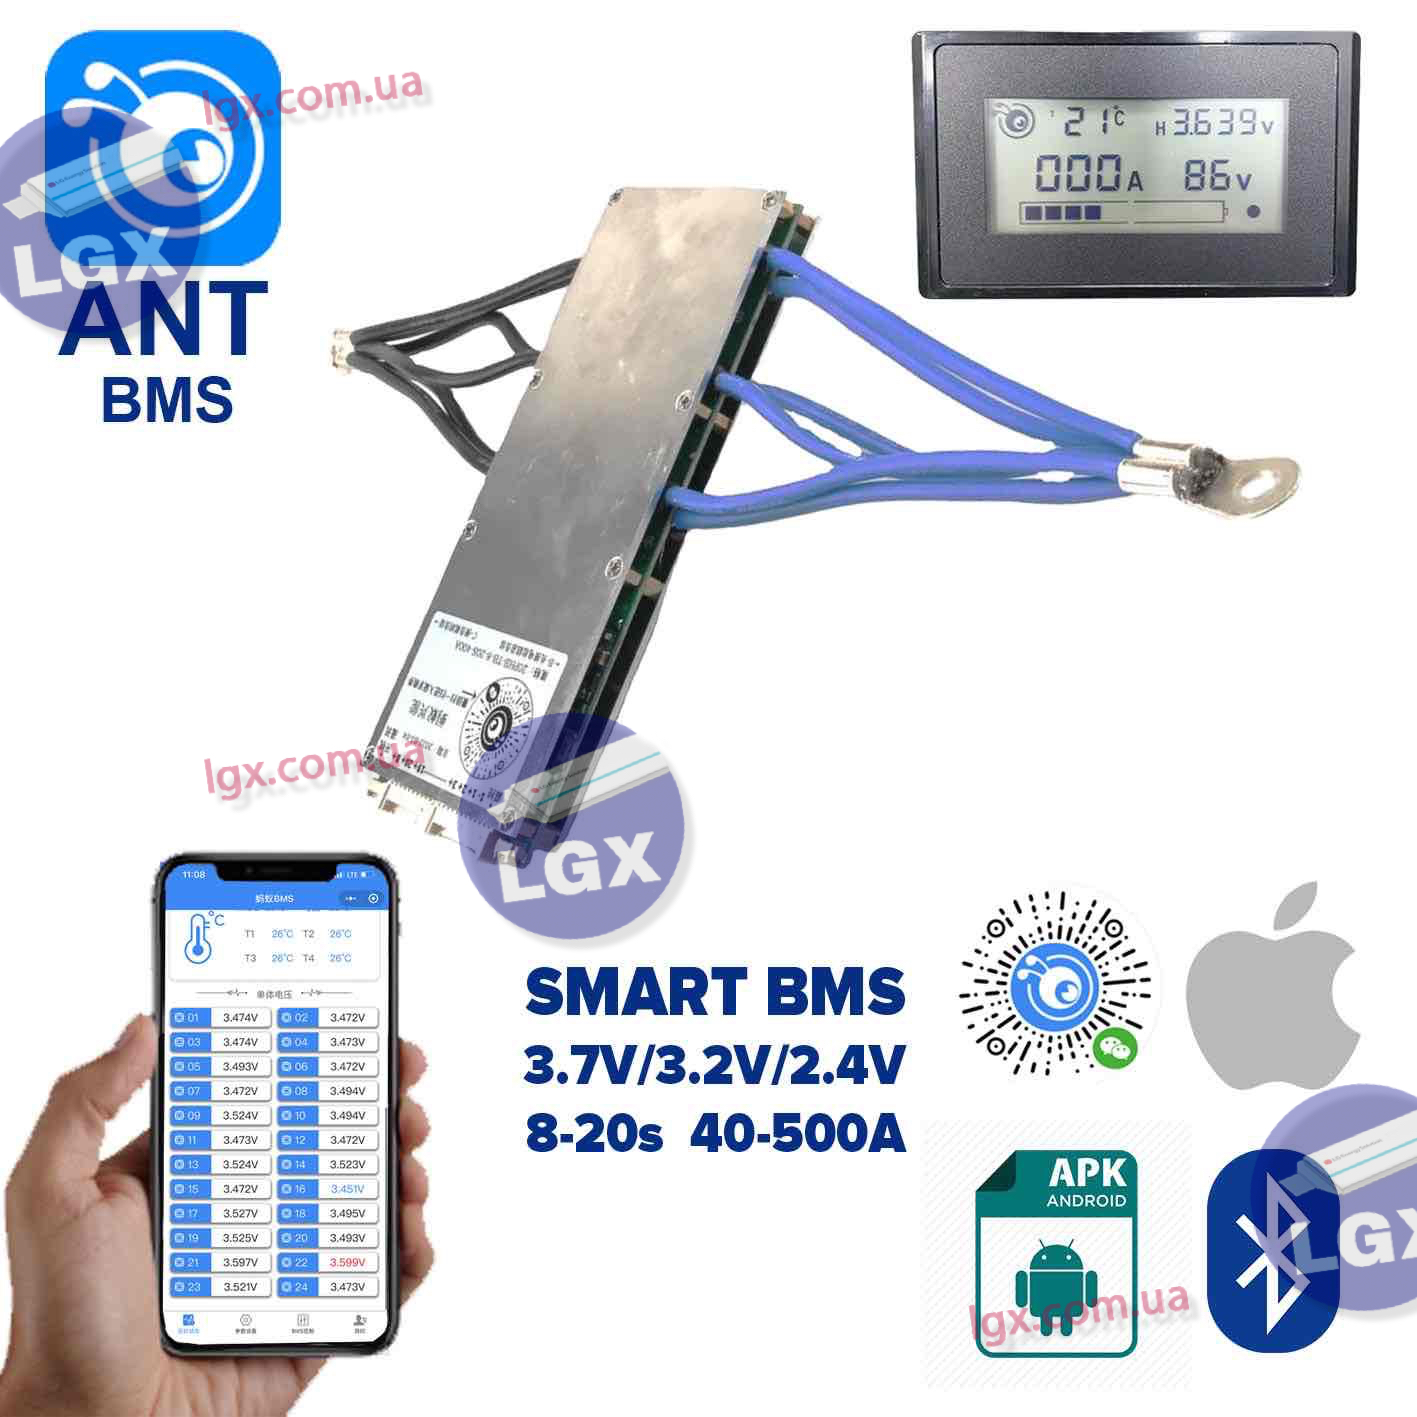 Smart SMART BMS ANT 8-20s 60-500A Симетричная  Активный Баласир 50mAh Li-ion, LiPo, LifePO4, LTO, NMC, LiHV Вес 300-750g Bluetooth Android IOS PC APP APK